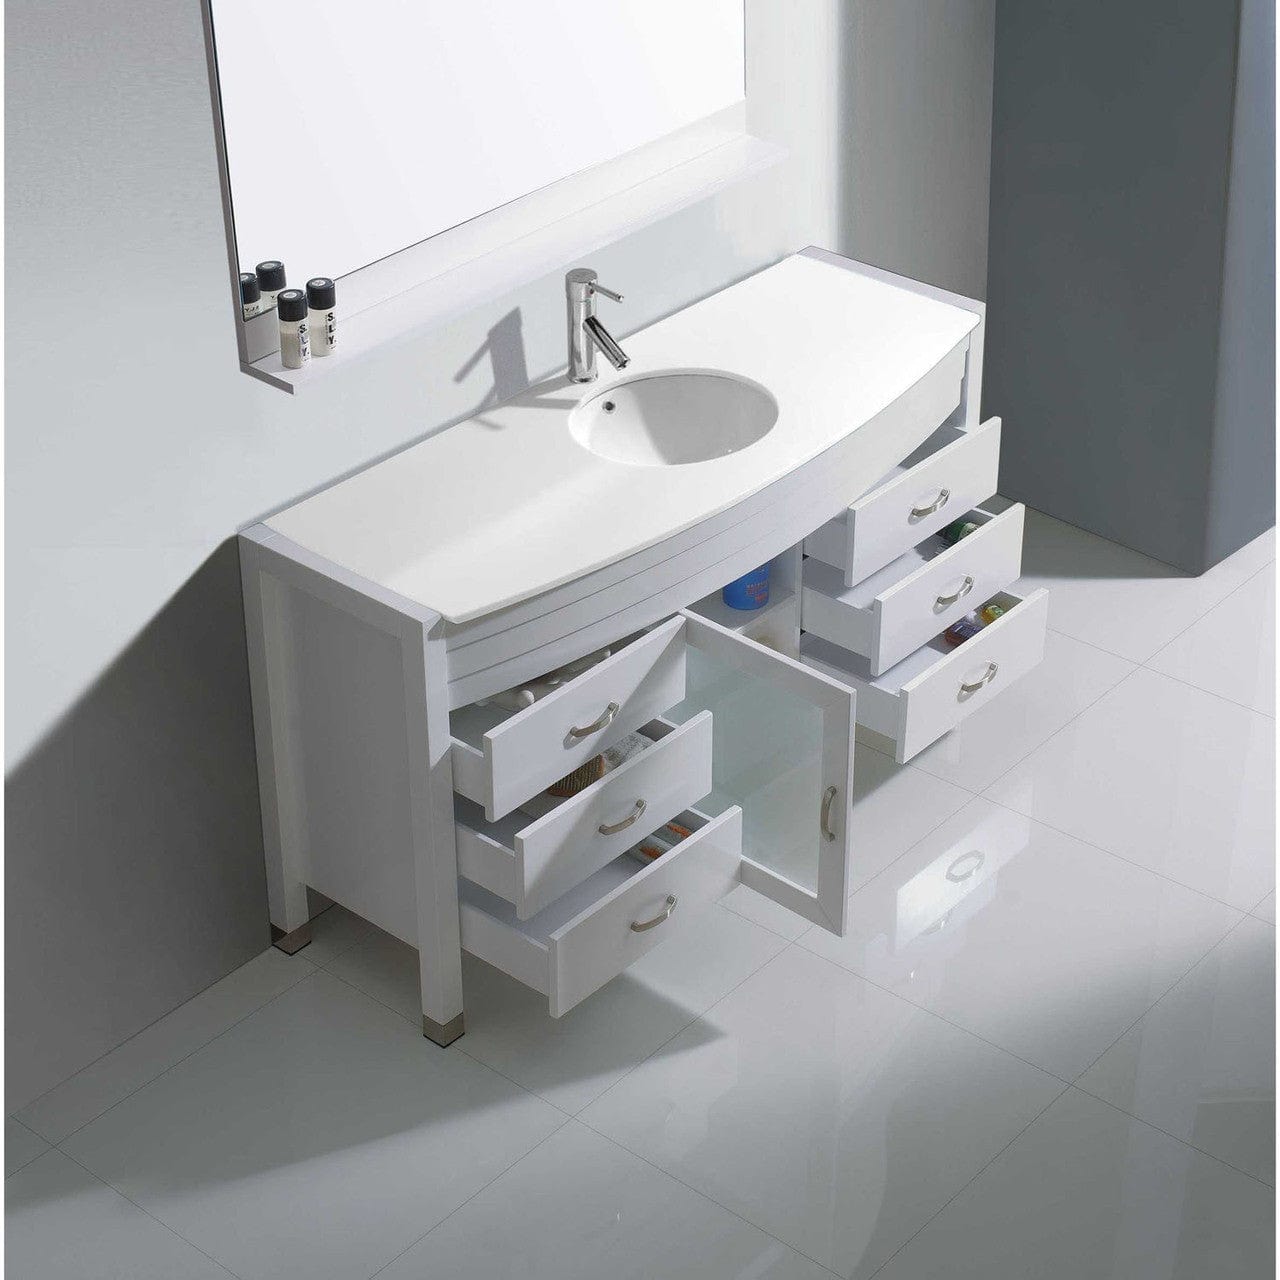 Virtu USA Ava 55 Single Bathroom Vanity Set in White